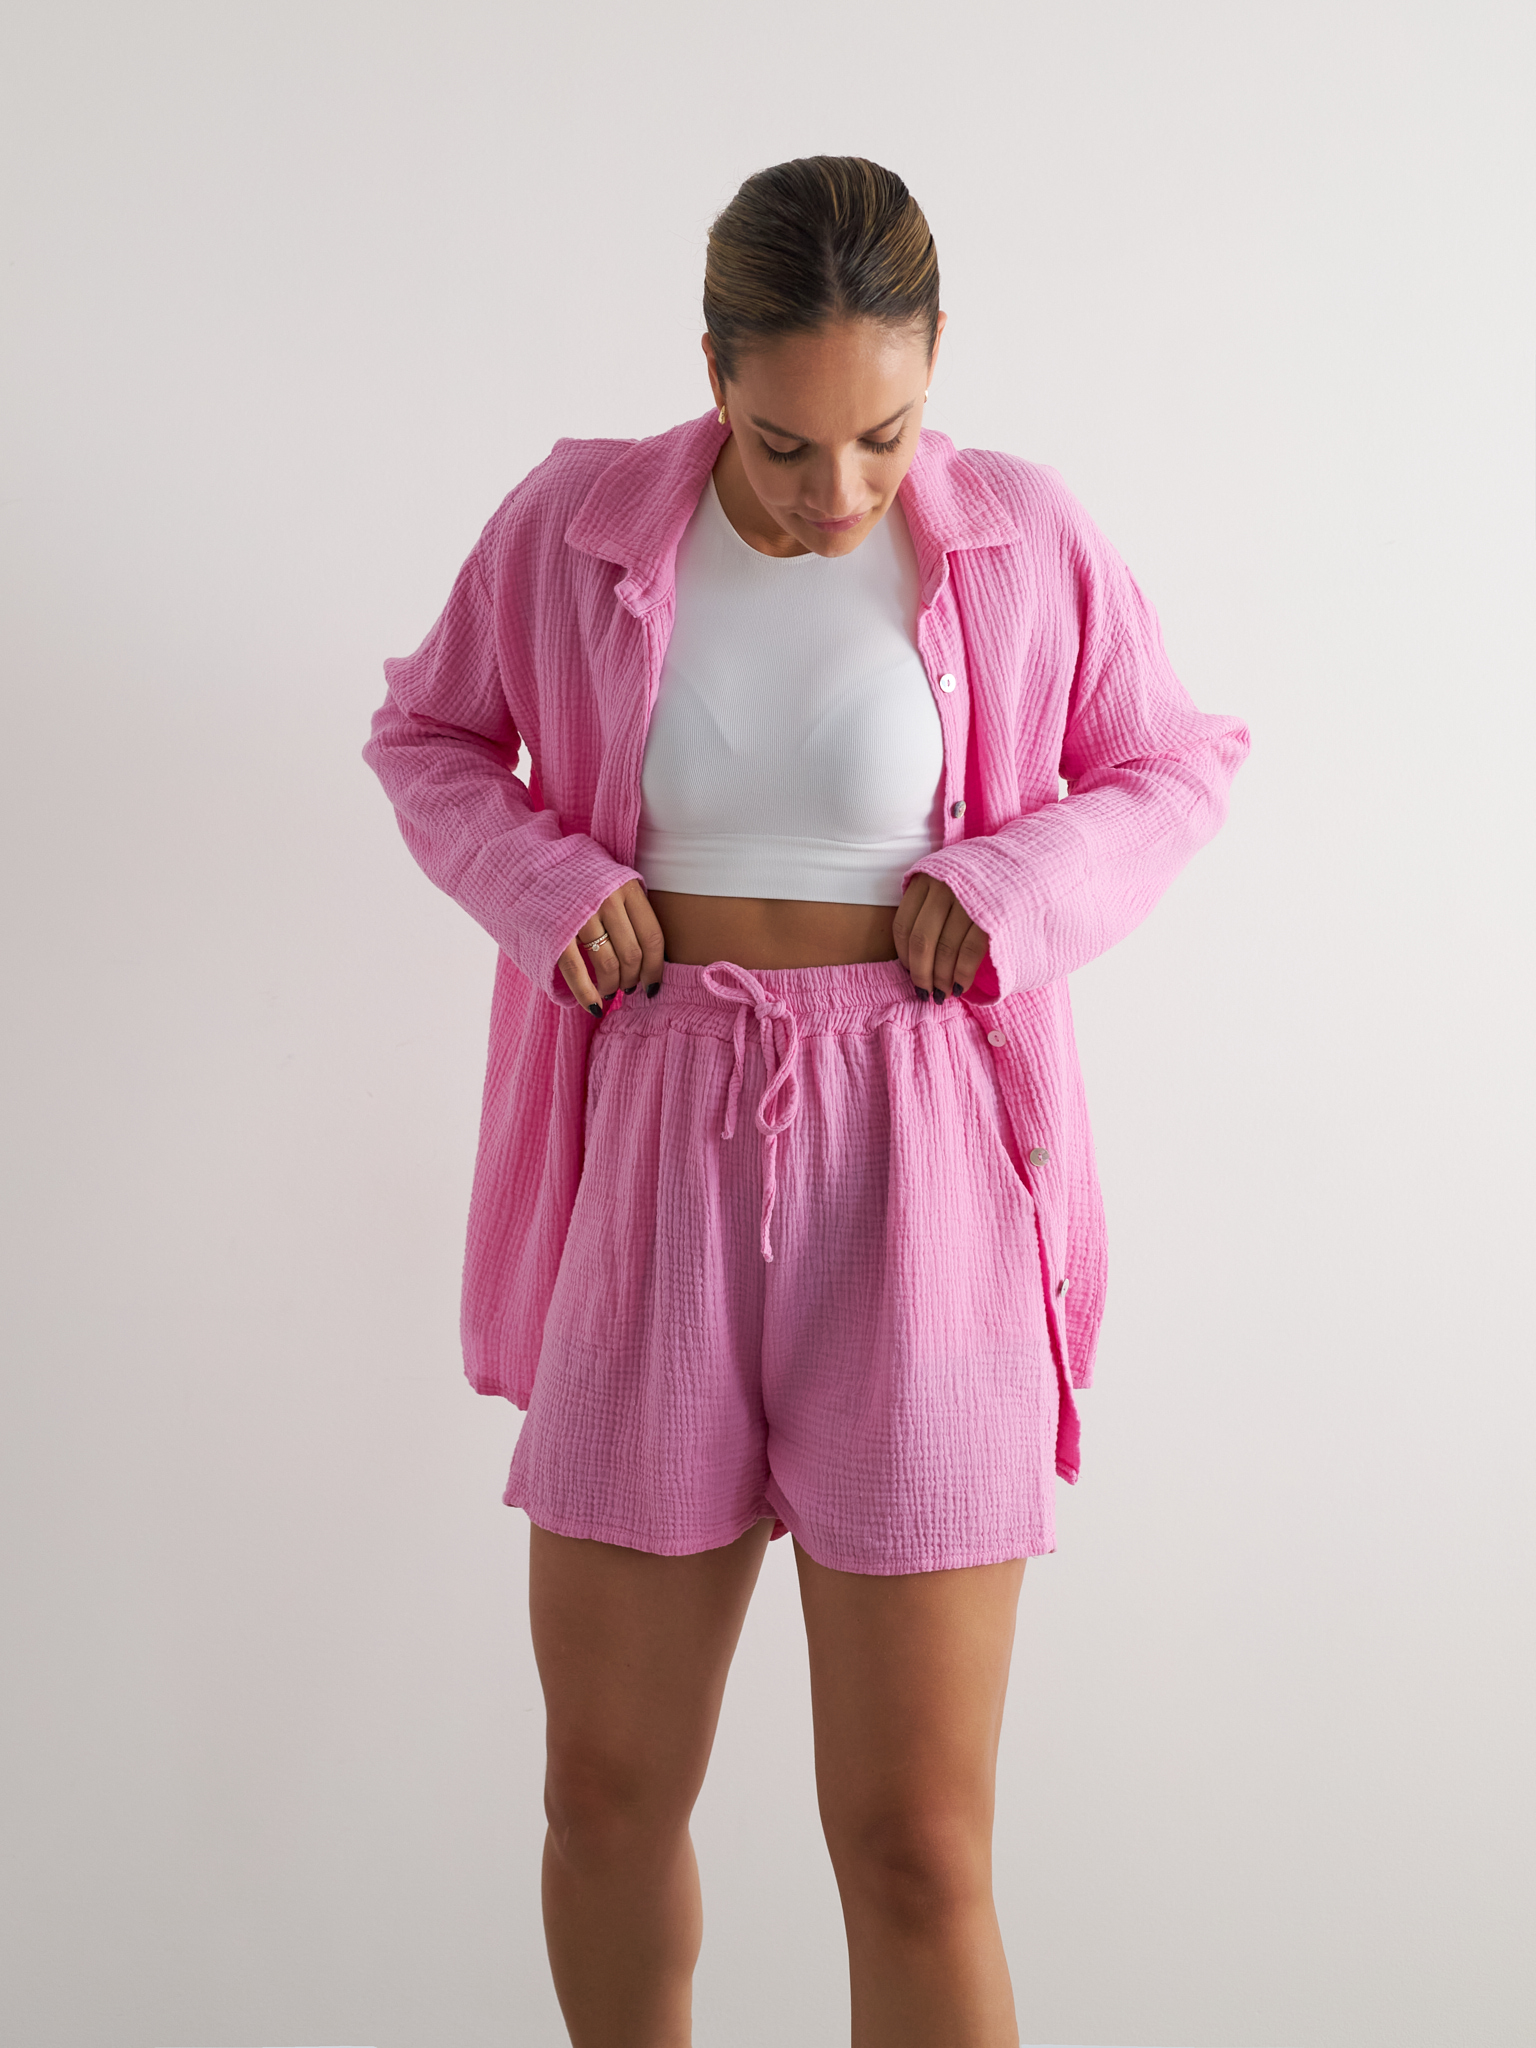 Muriel Heart Pink Long Sleeve Top and Legging Set, L-XL